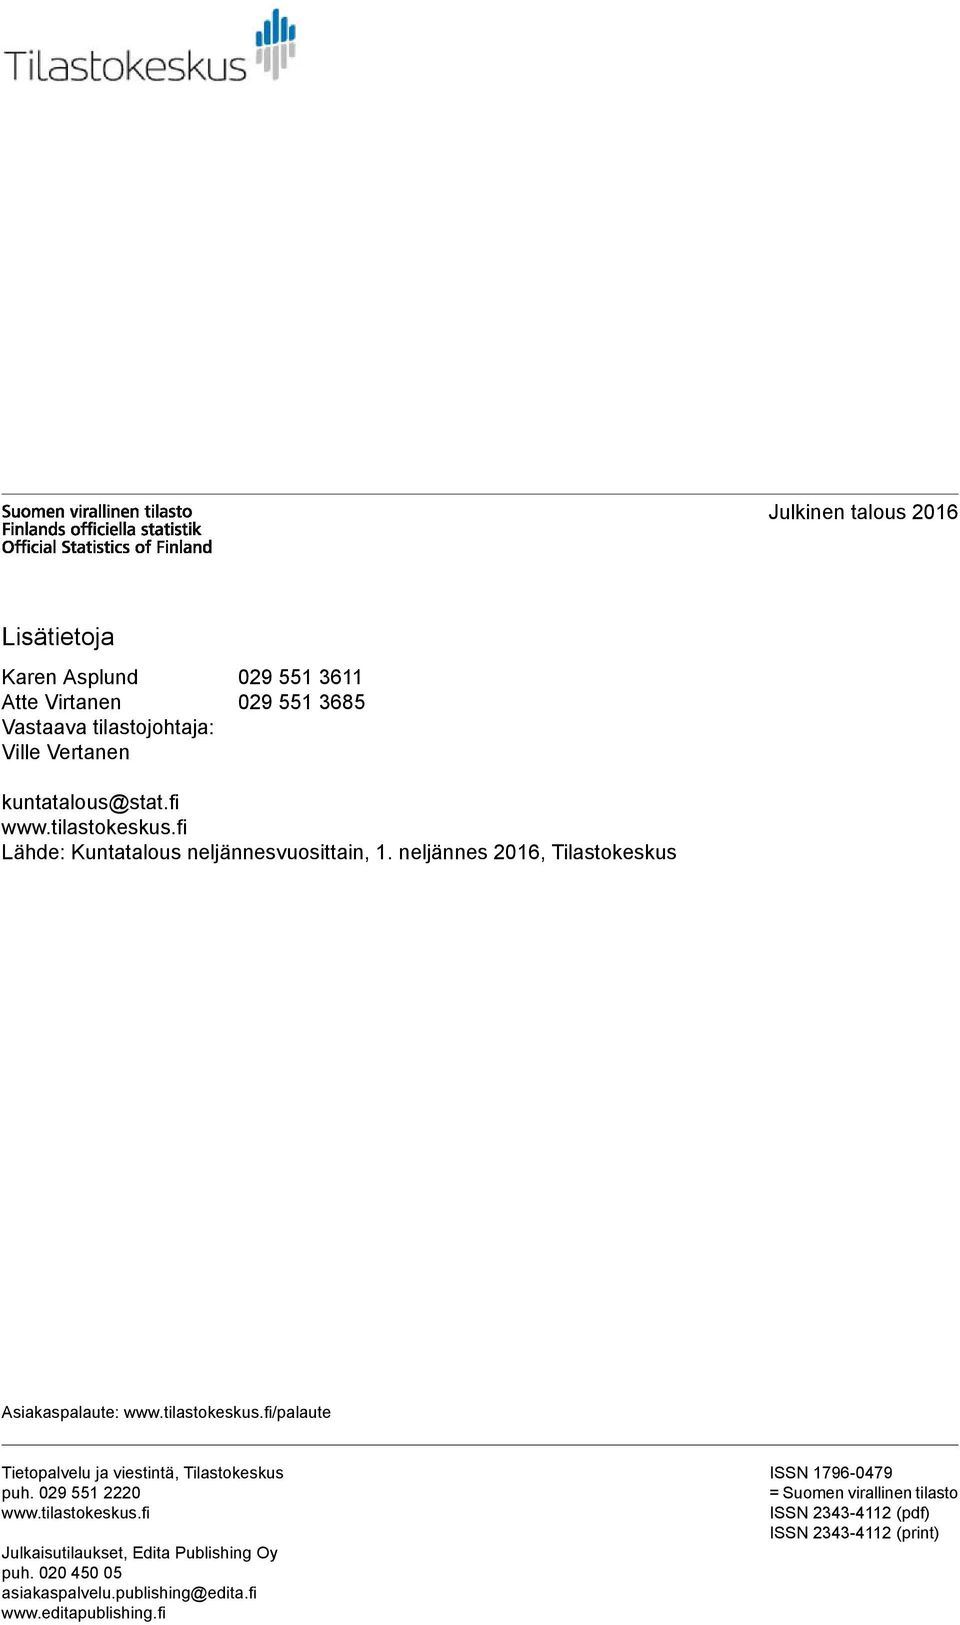 029 551 2220 www.tilastokeskus.fi Julkaisutilaukset, Edita Publishing Oy puh. 020 450 05 asiakaspalvelu.publishing@edita.fi www.